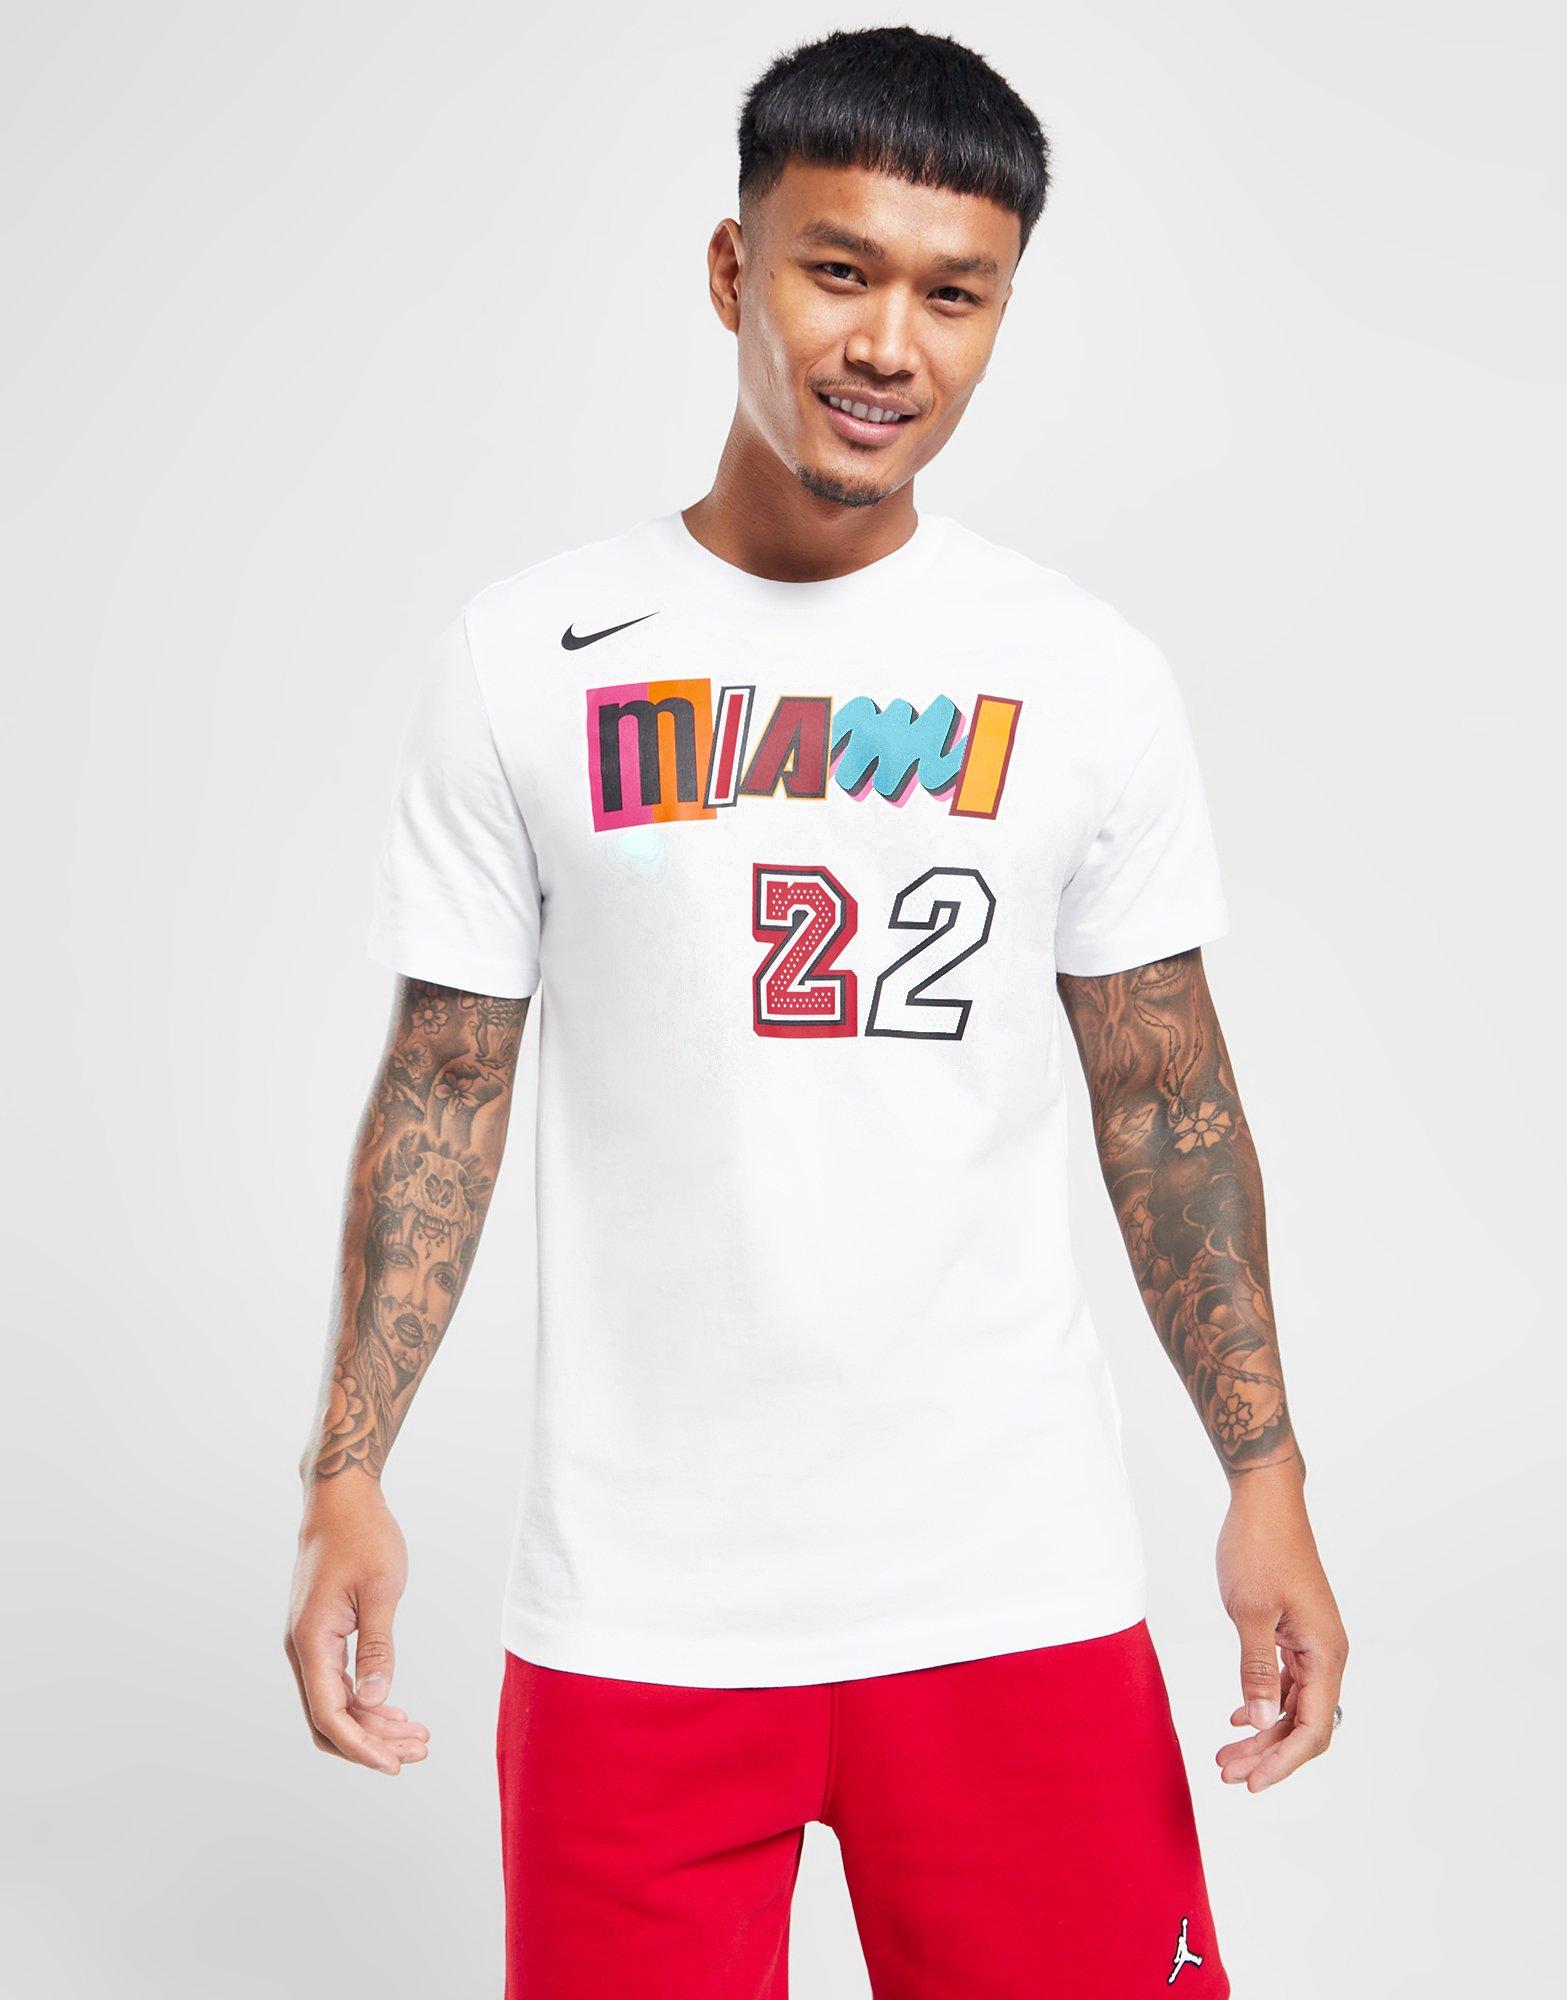 NBA T-Shirts - Shop Retro & Modern NBA T-Shirts Australia Wide